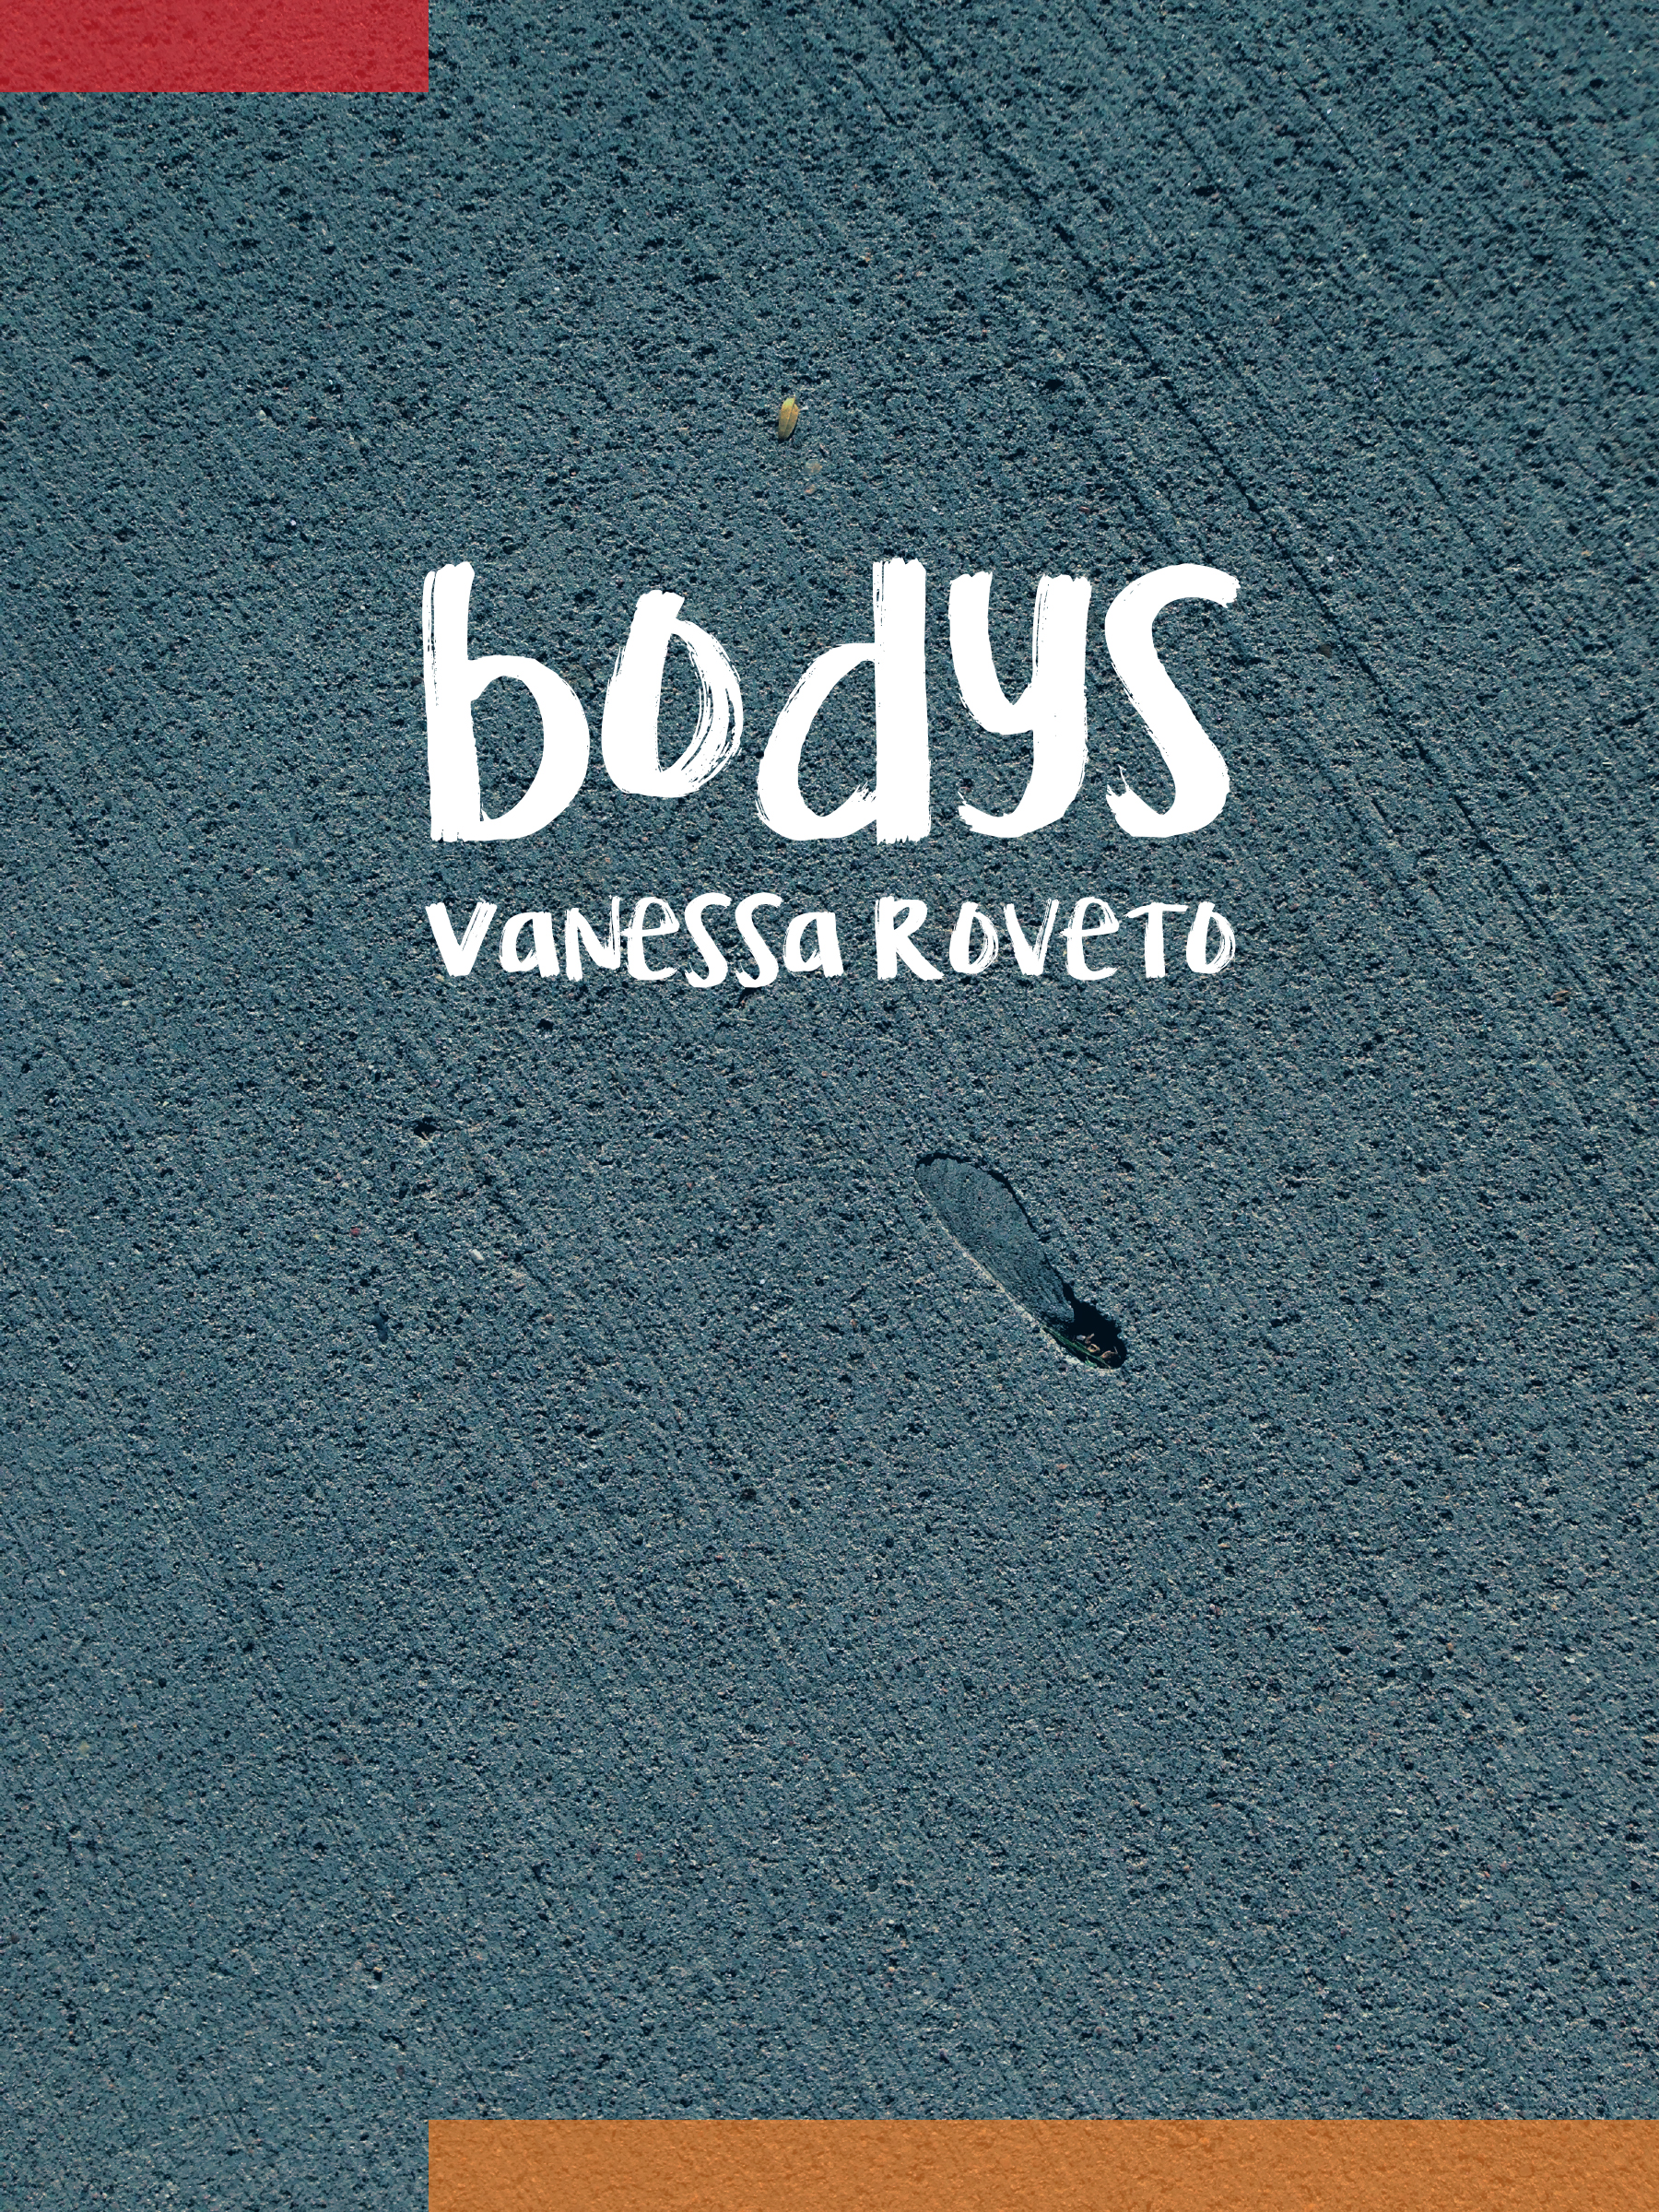 bodys Cover